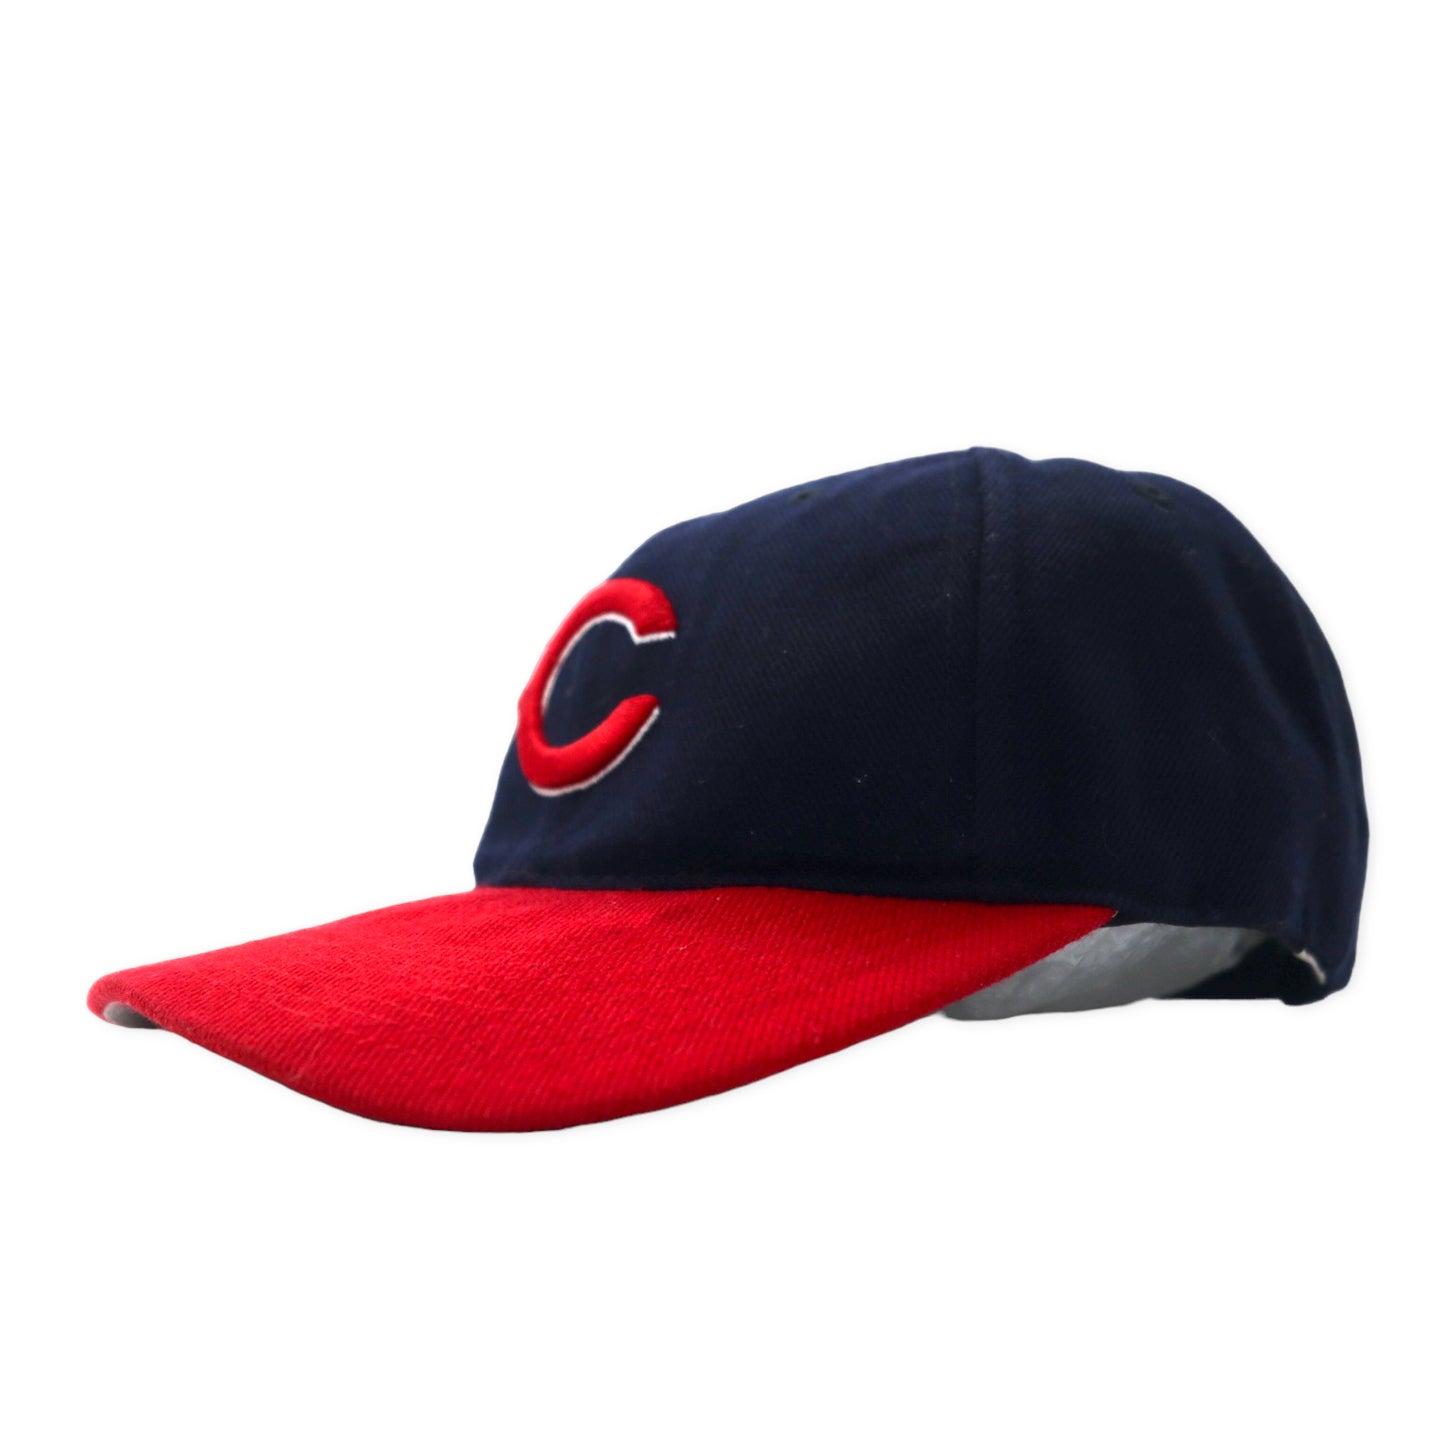 MLB Cincinnati Reds ベースボールキャップ ONE ネイビー レッド アクリル スナップバック シンシナティ レッズ OUTDOOR CAP